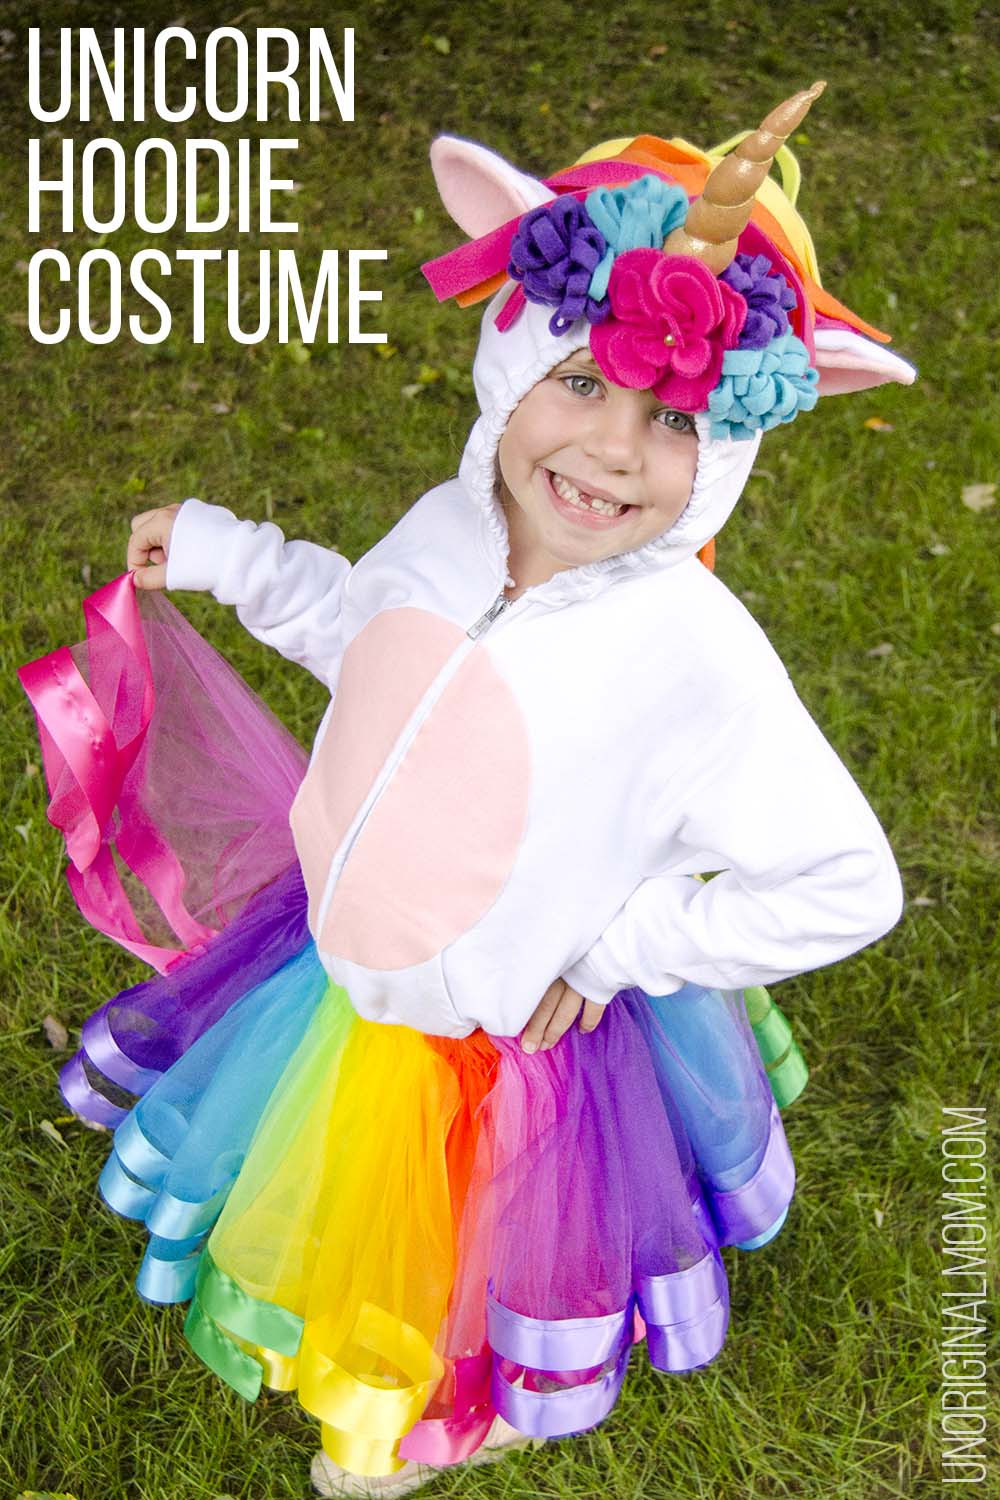 Best ideas about DIY Unicorn Costume
. Save or Pin DIY Unicorn Hoo Costume with Rainbow Tutu Tutorial Now.